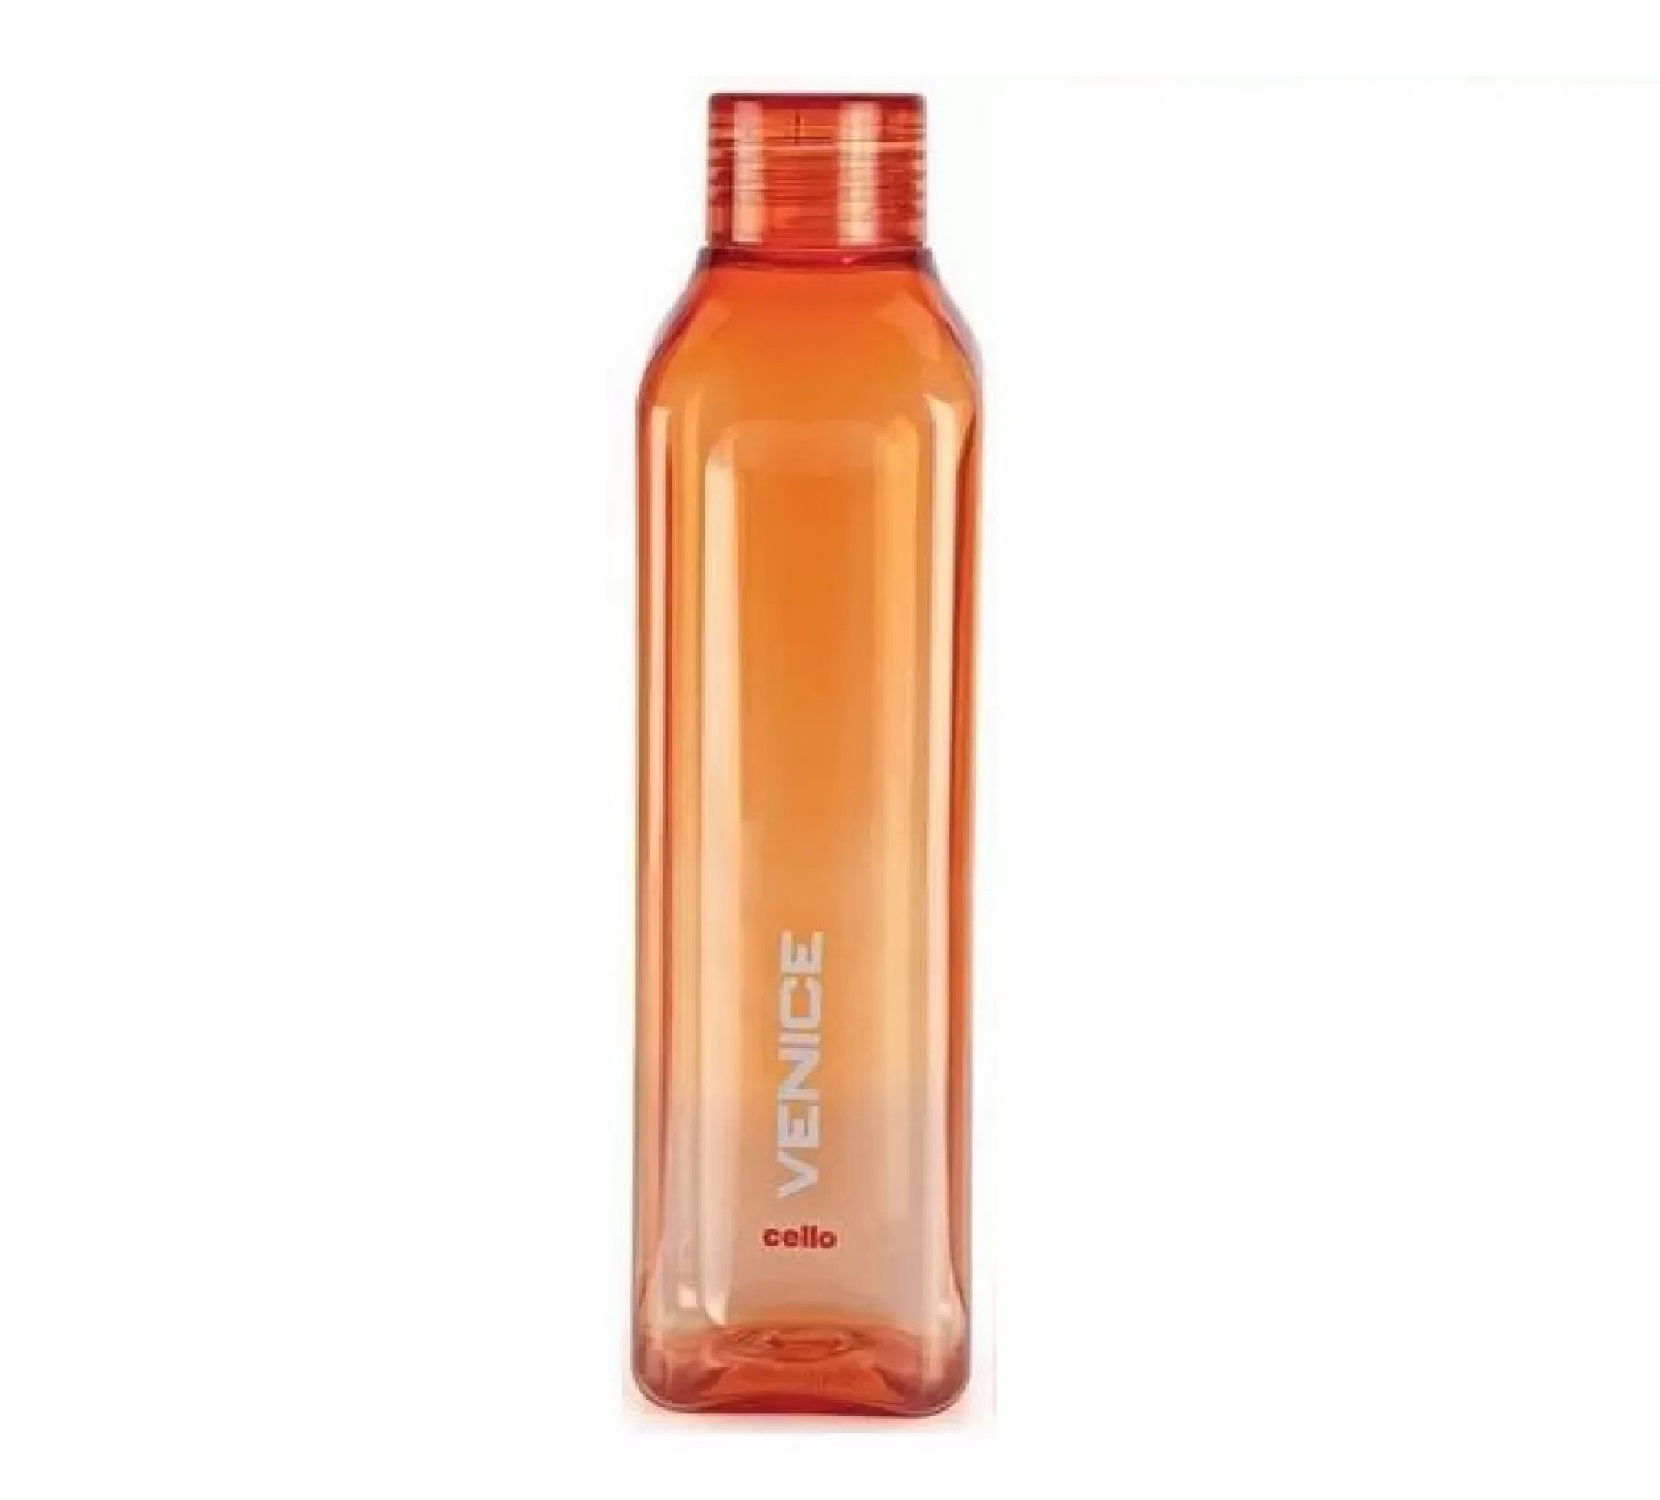 Cello Venice Plastic Water Bottle, (1L, Orange)